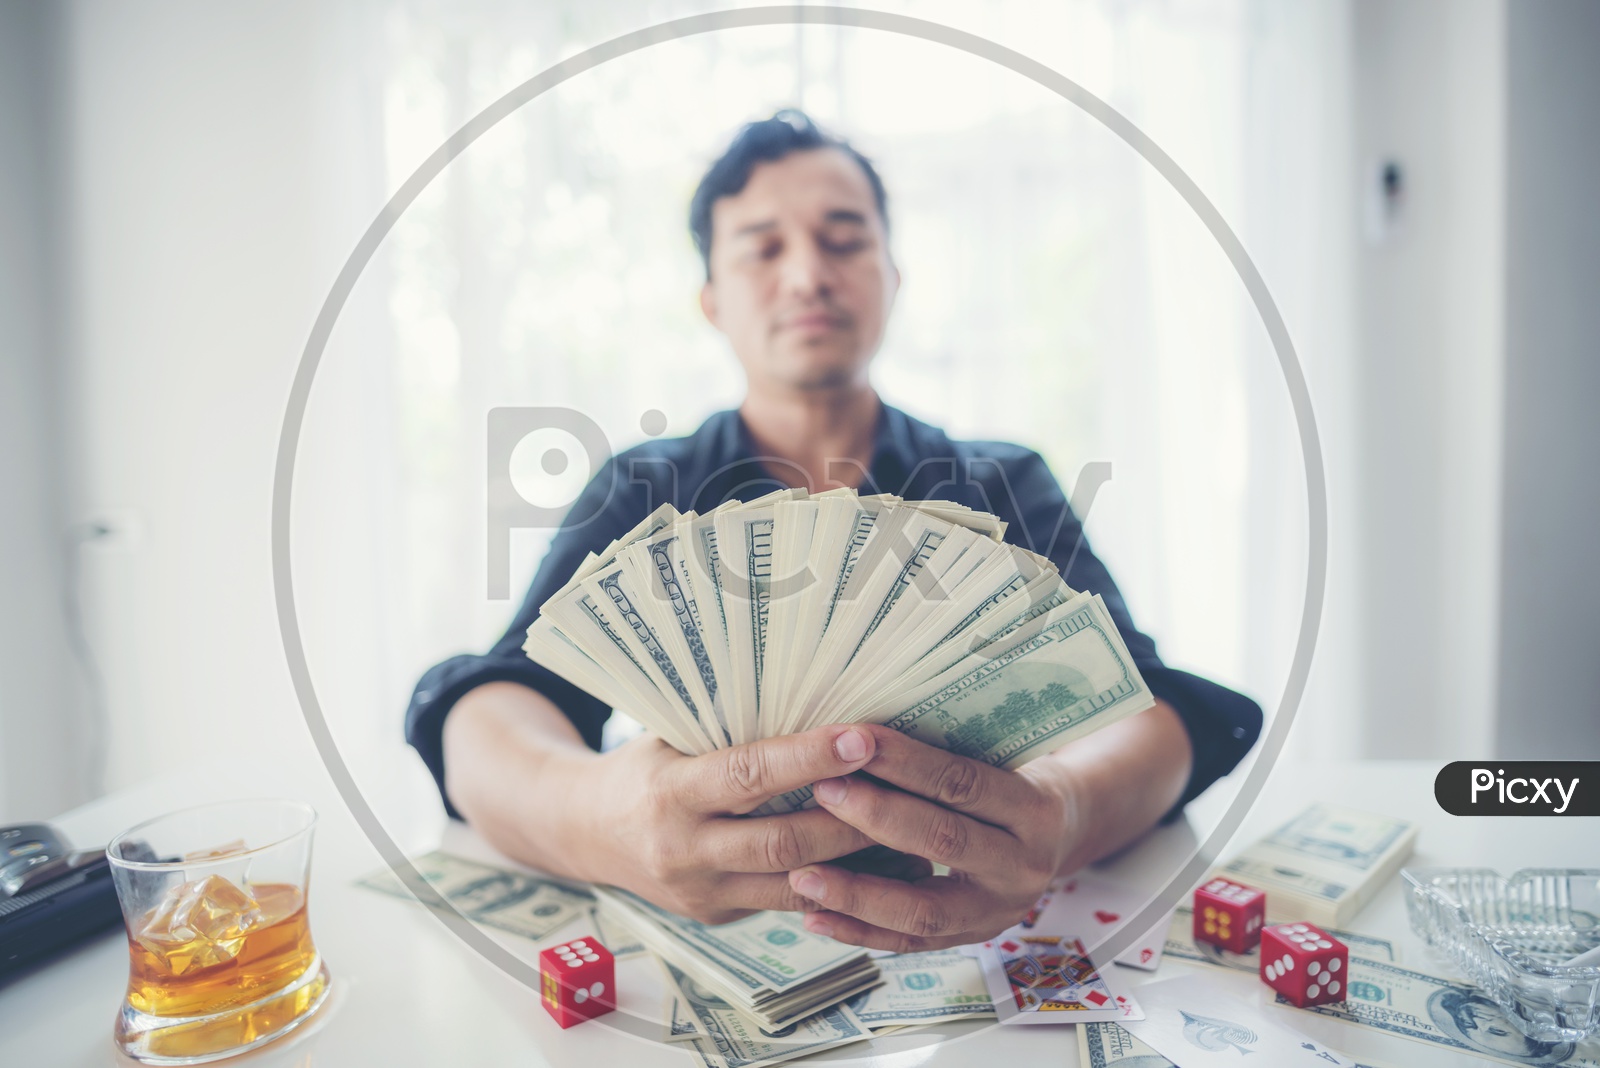 Gambler Losing Money in Gambling  Concept